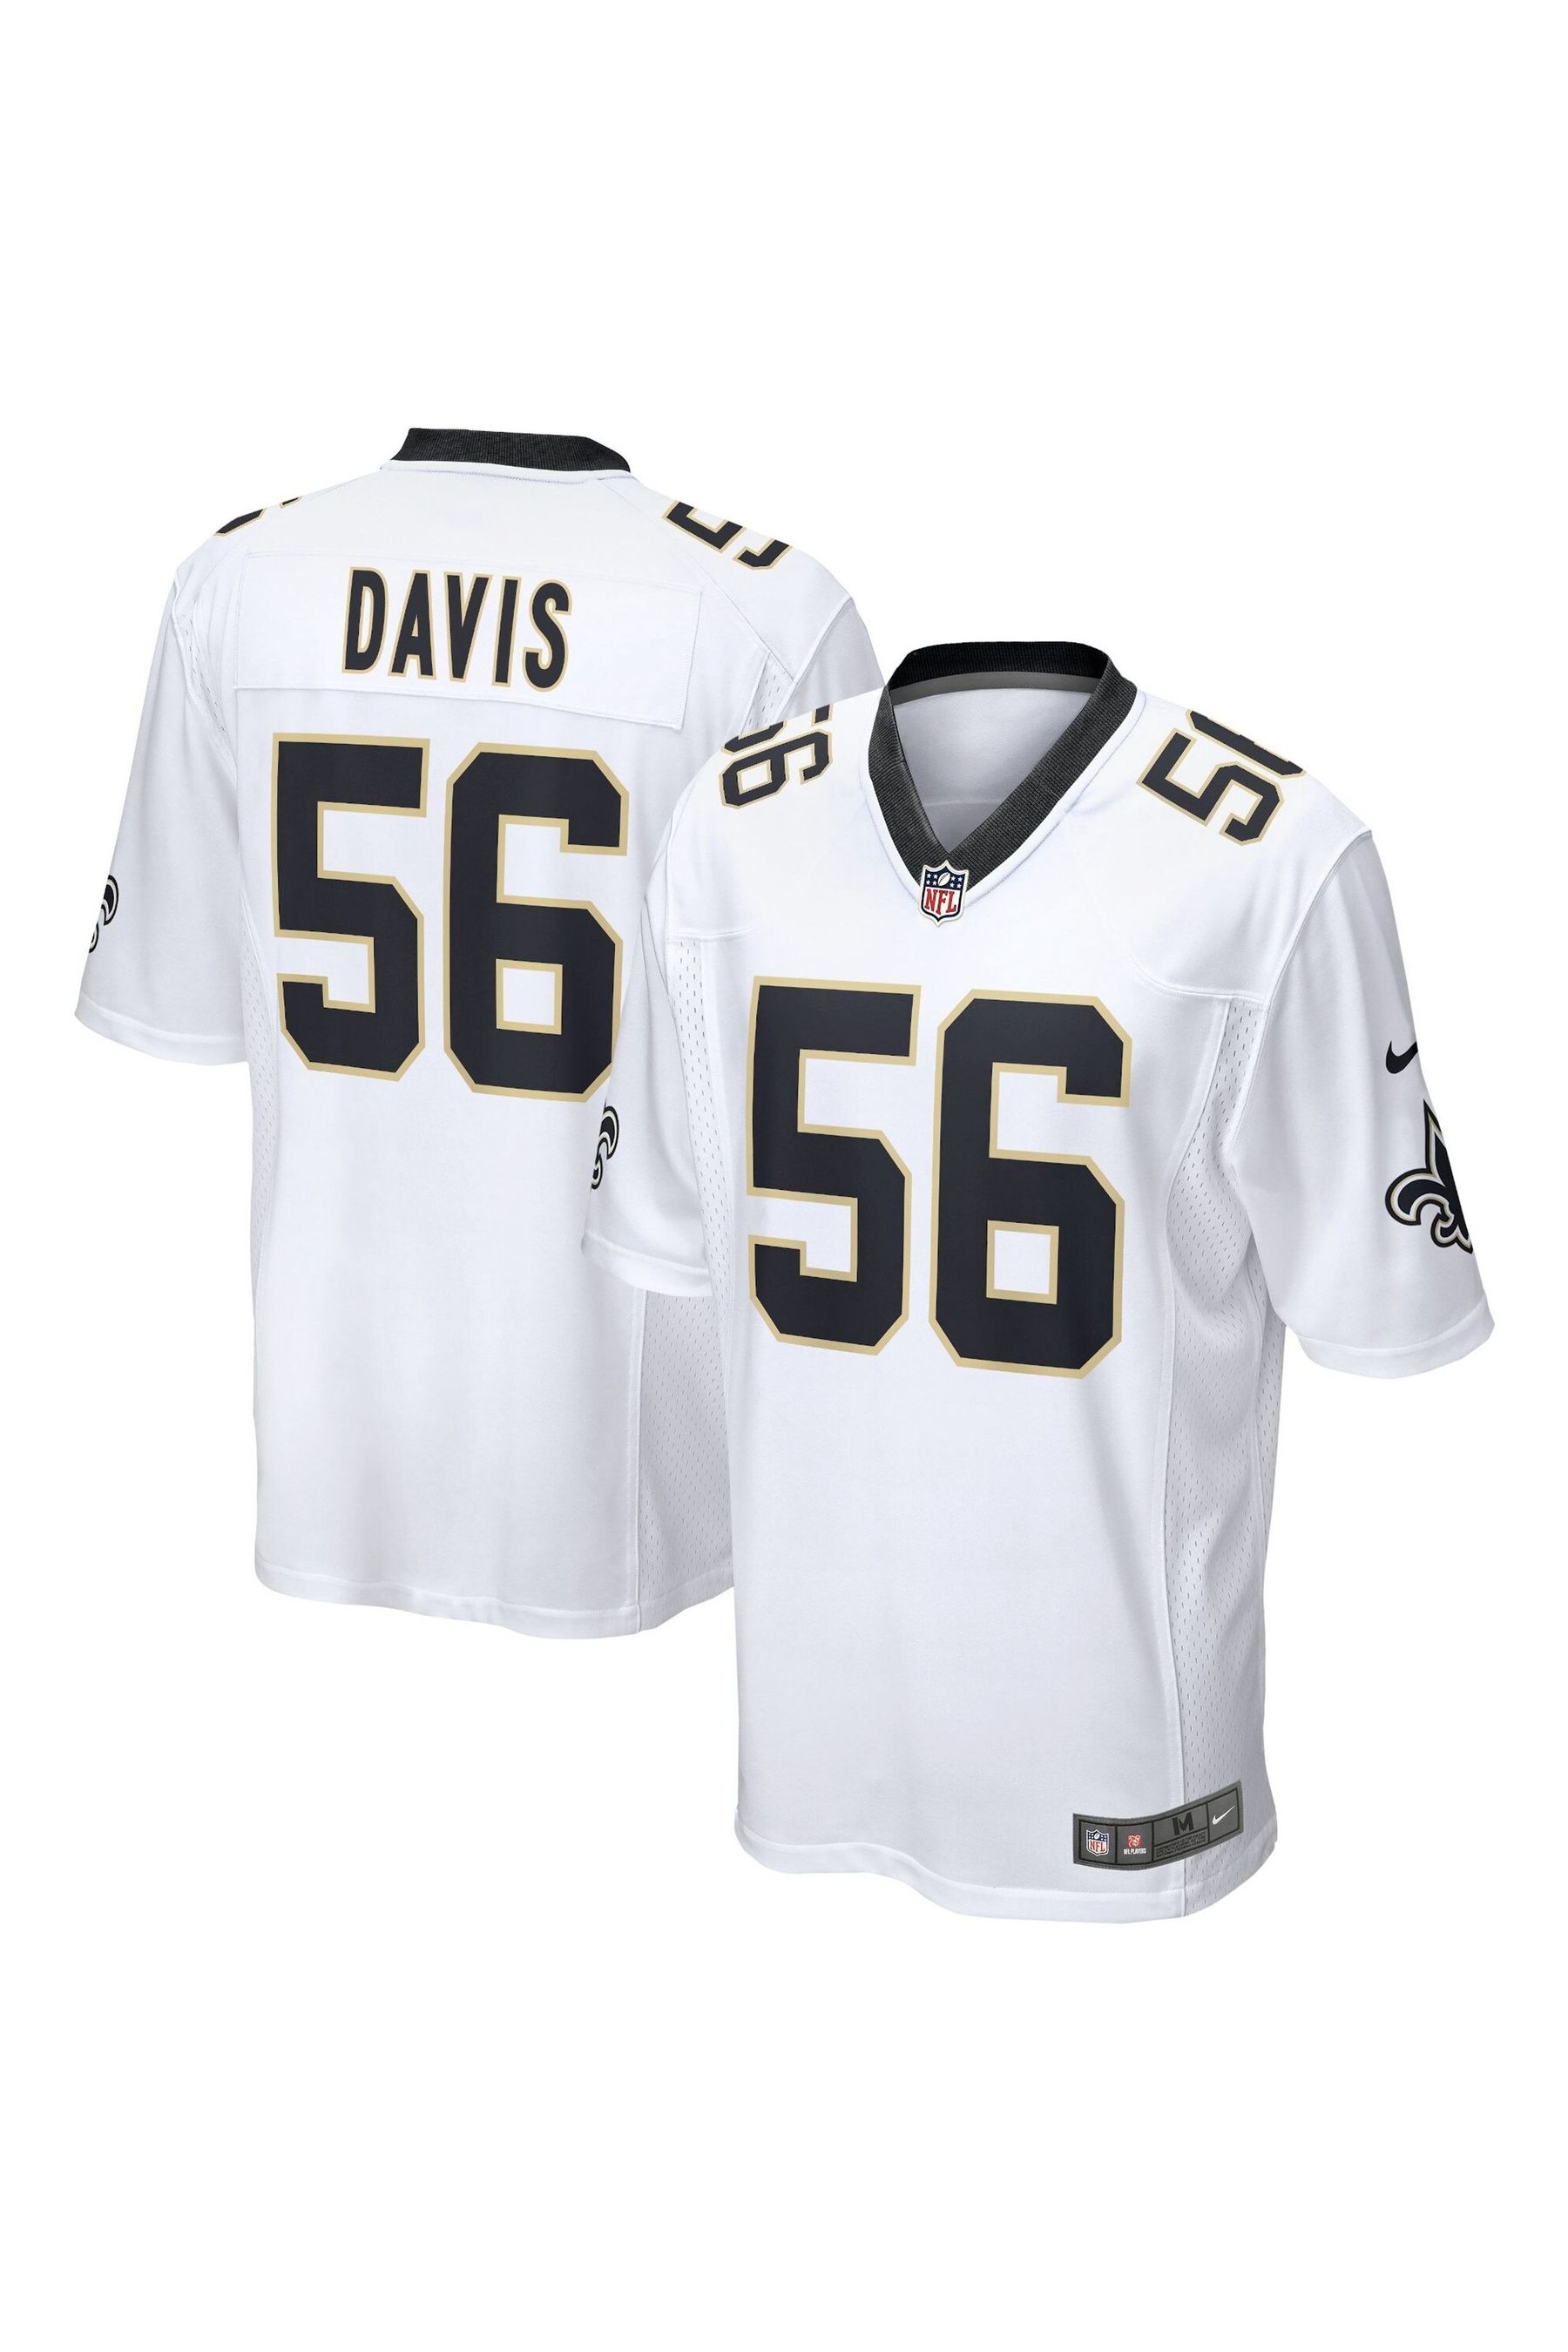 Buy Nike White NFL New Orleans Saints Game Road Jersey - Demario Davis ...